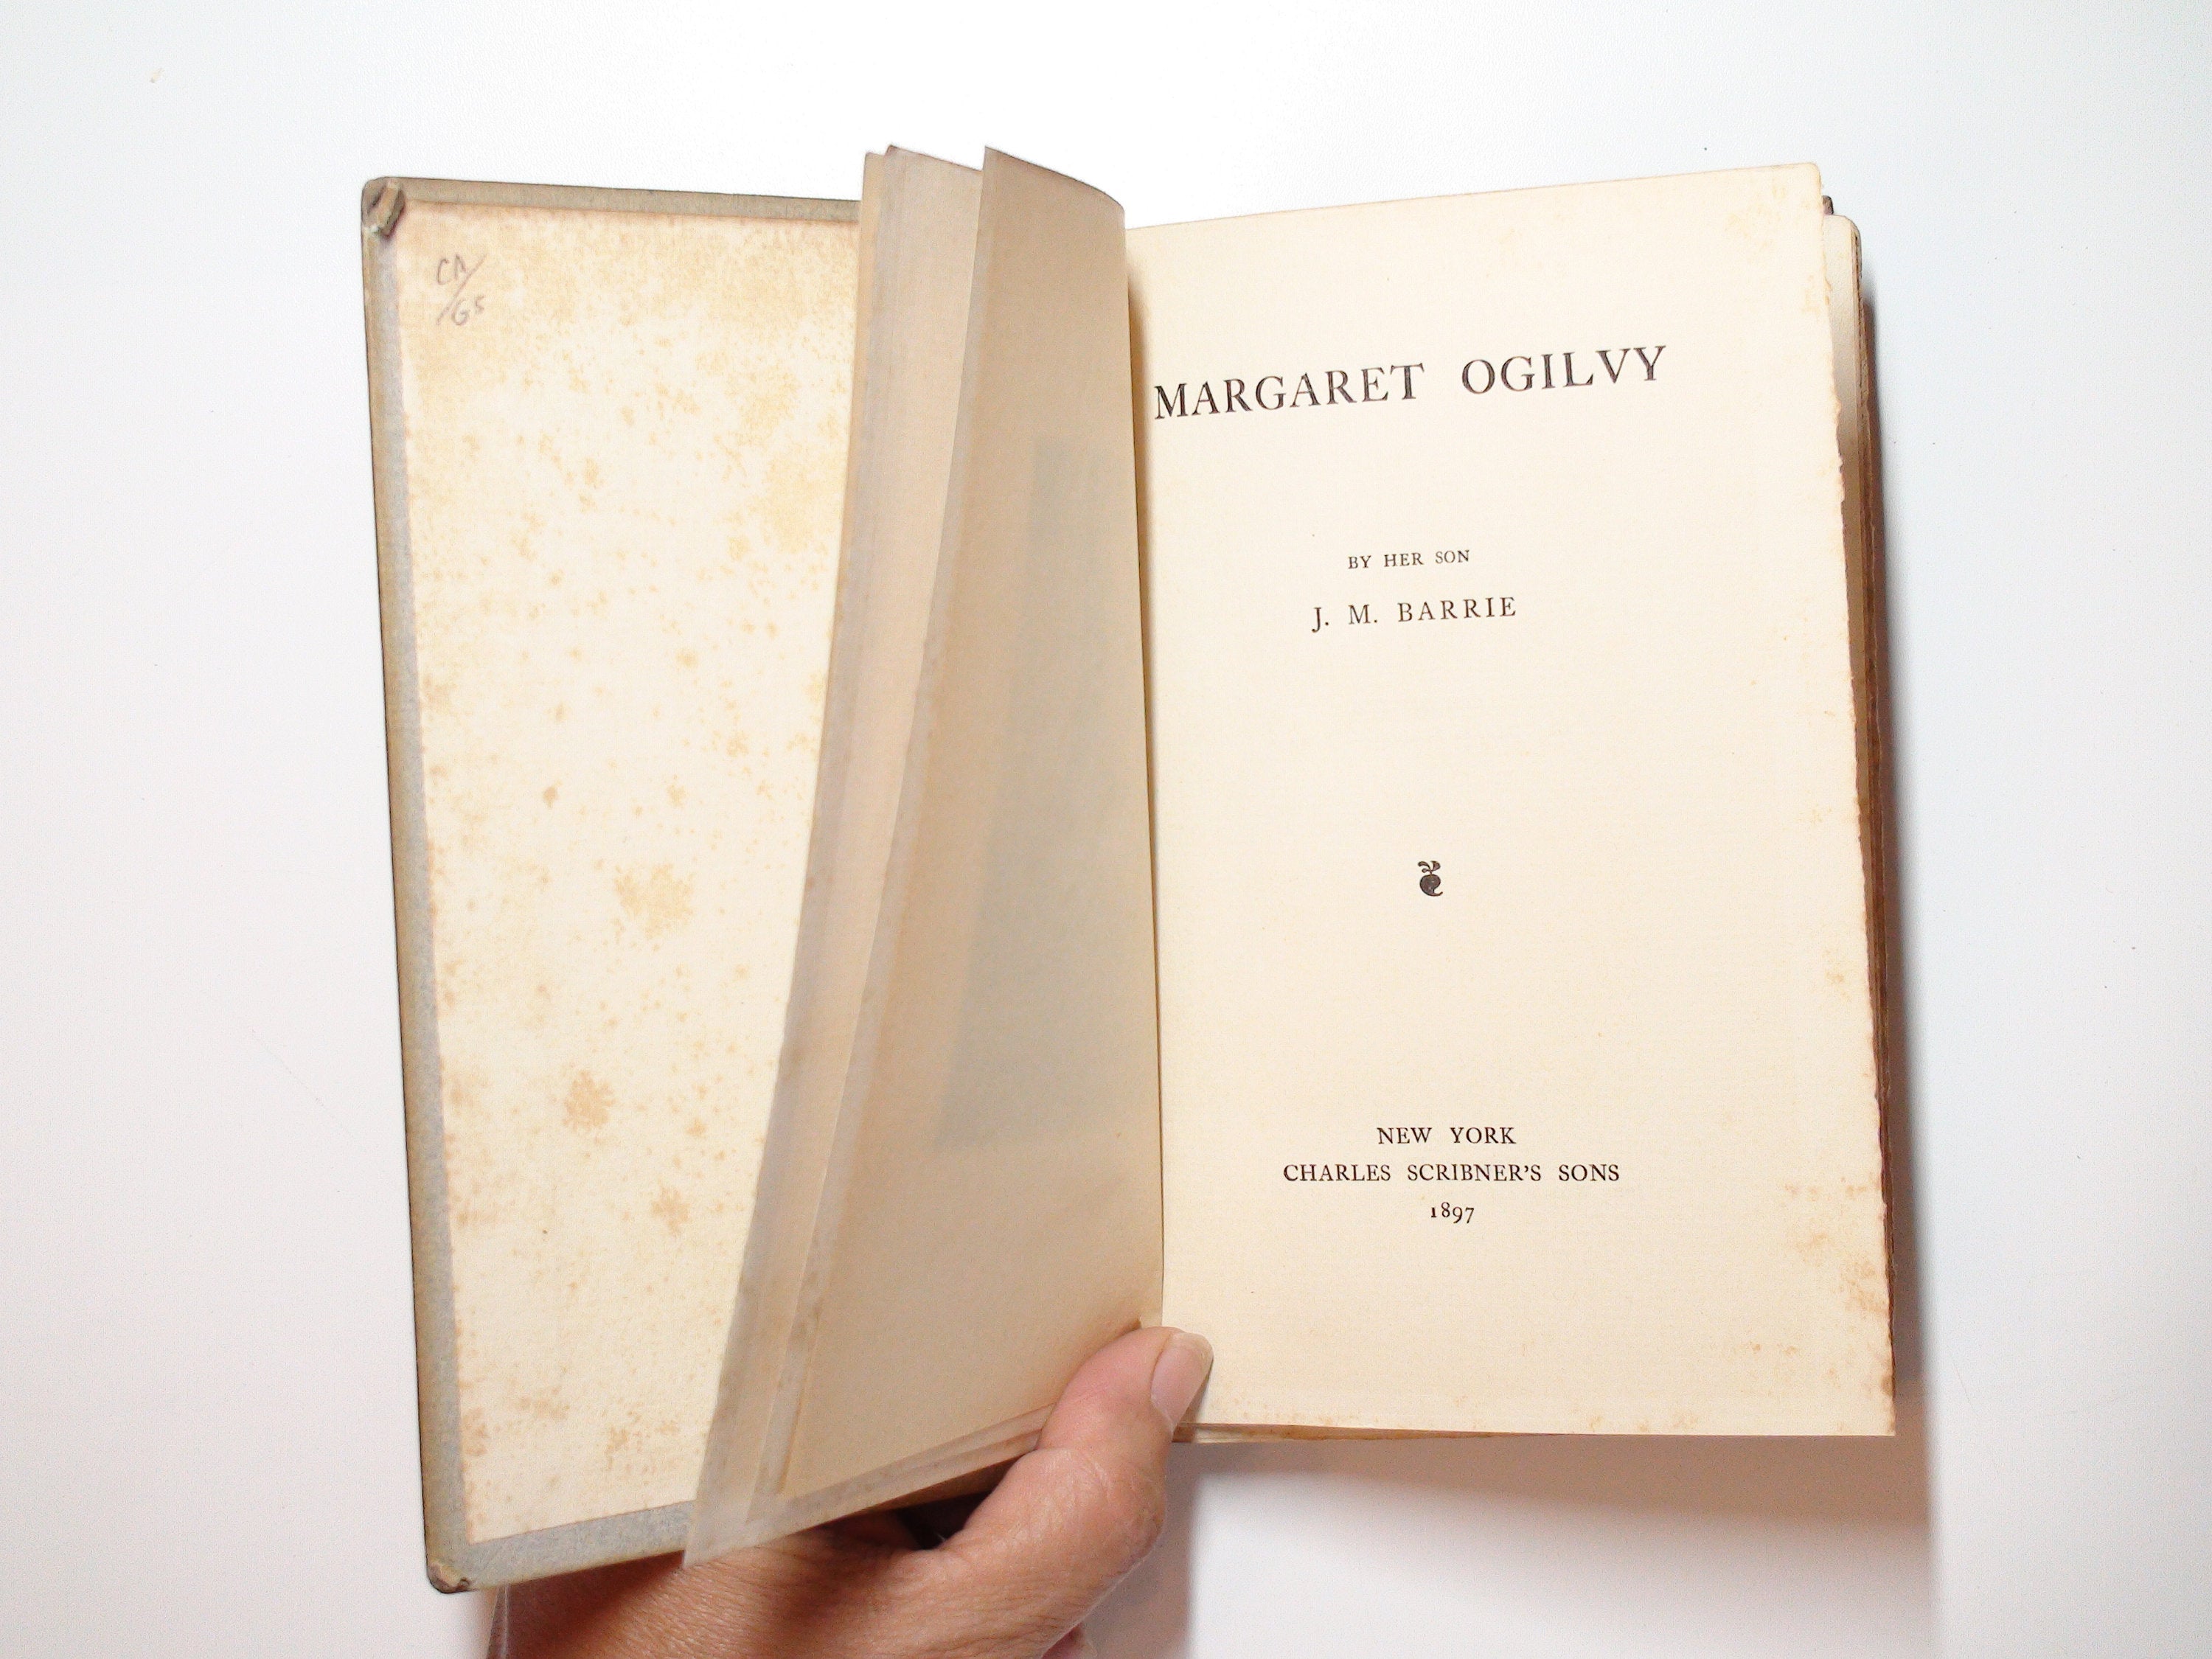 Margaret Ogilvy, by Her Son, J. M. Barrie, 1st US Ed, 1897